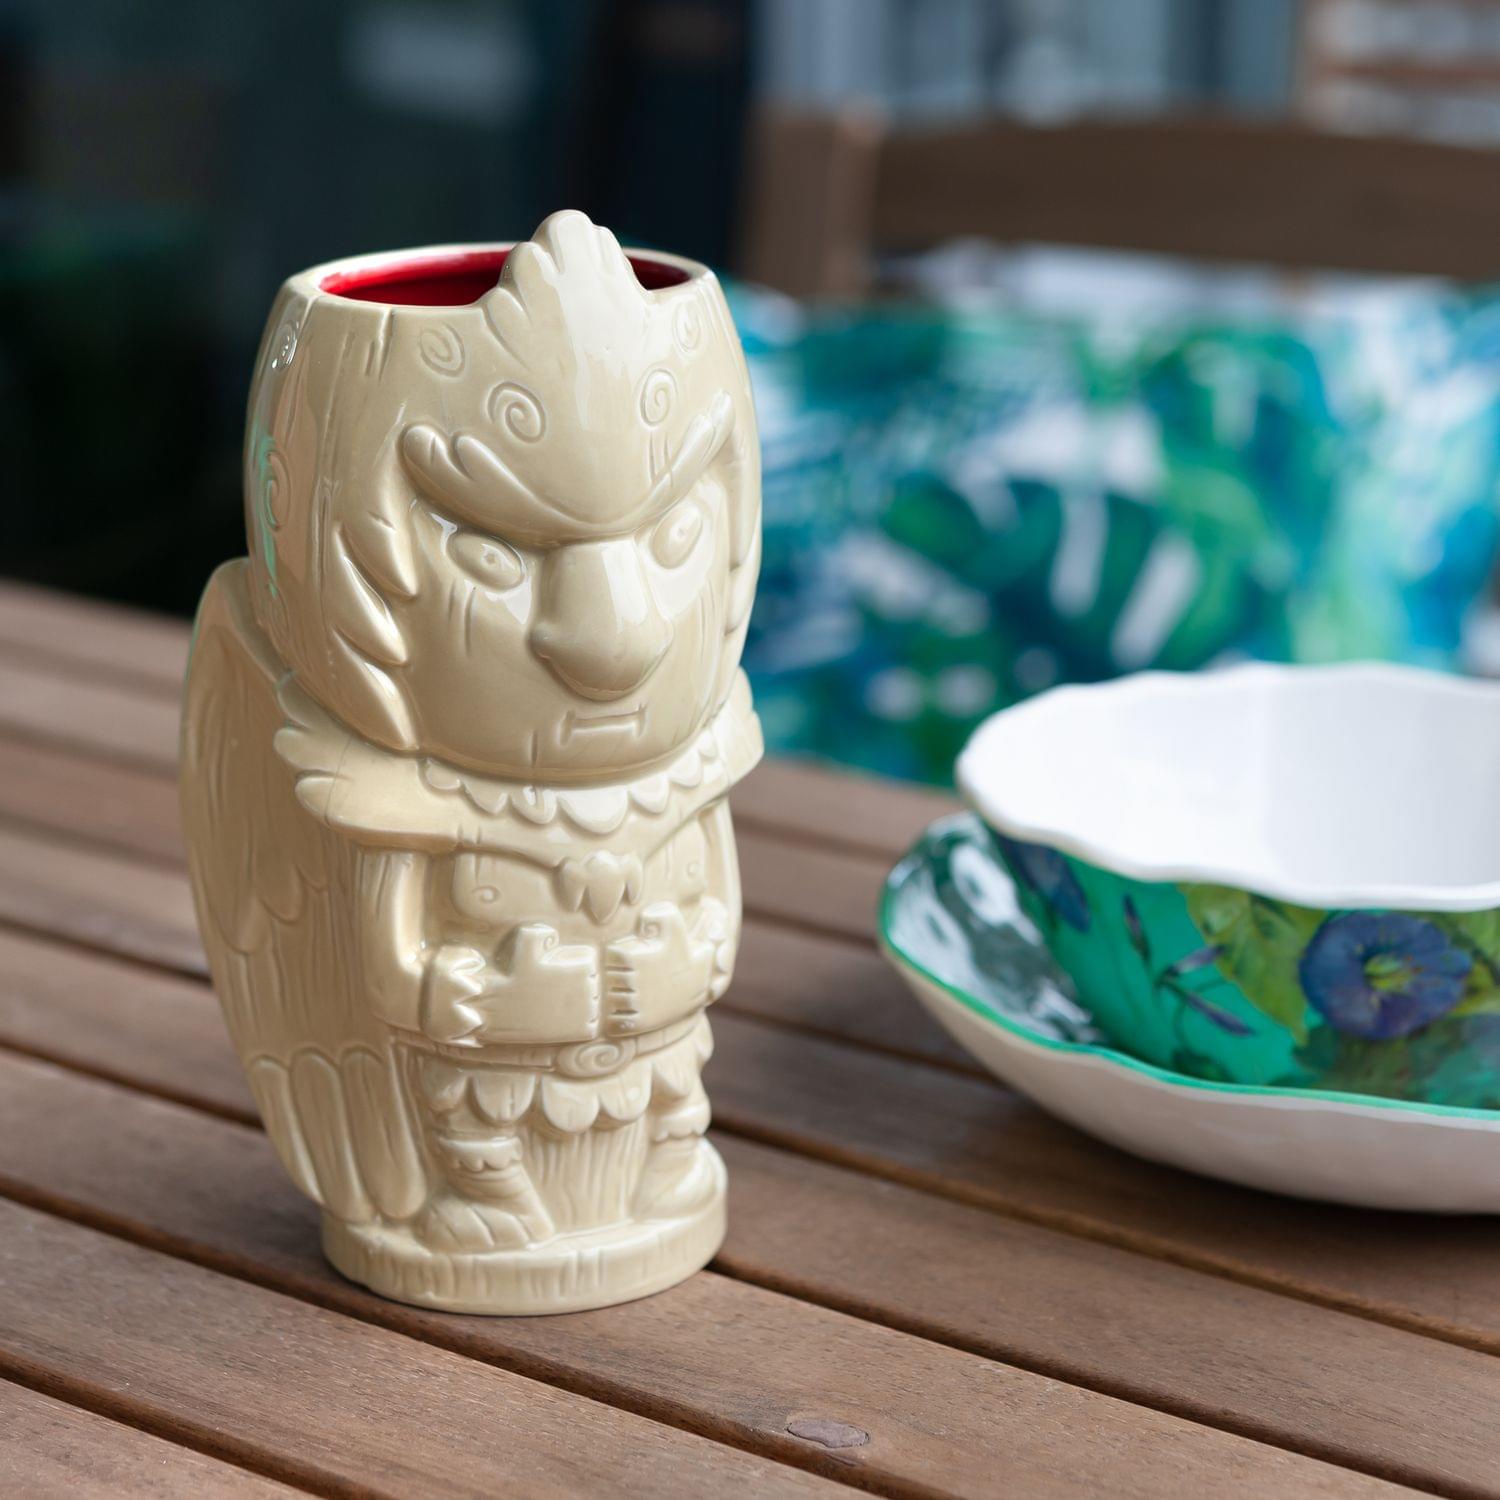 Geeki Tikis Rick & Morty Bird Person | Ceramic Tiki Style Mug | Holds 24 Ounces